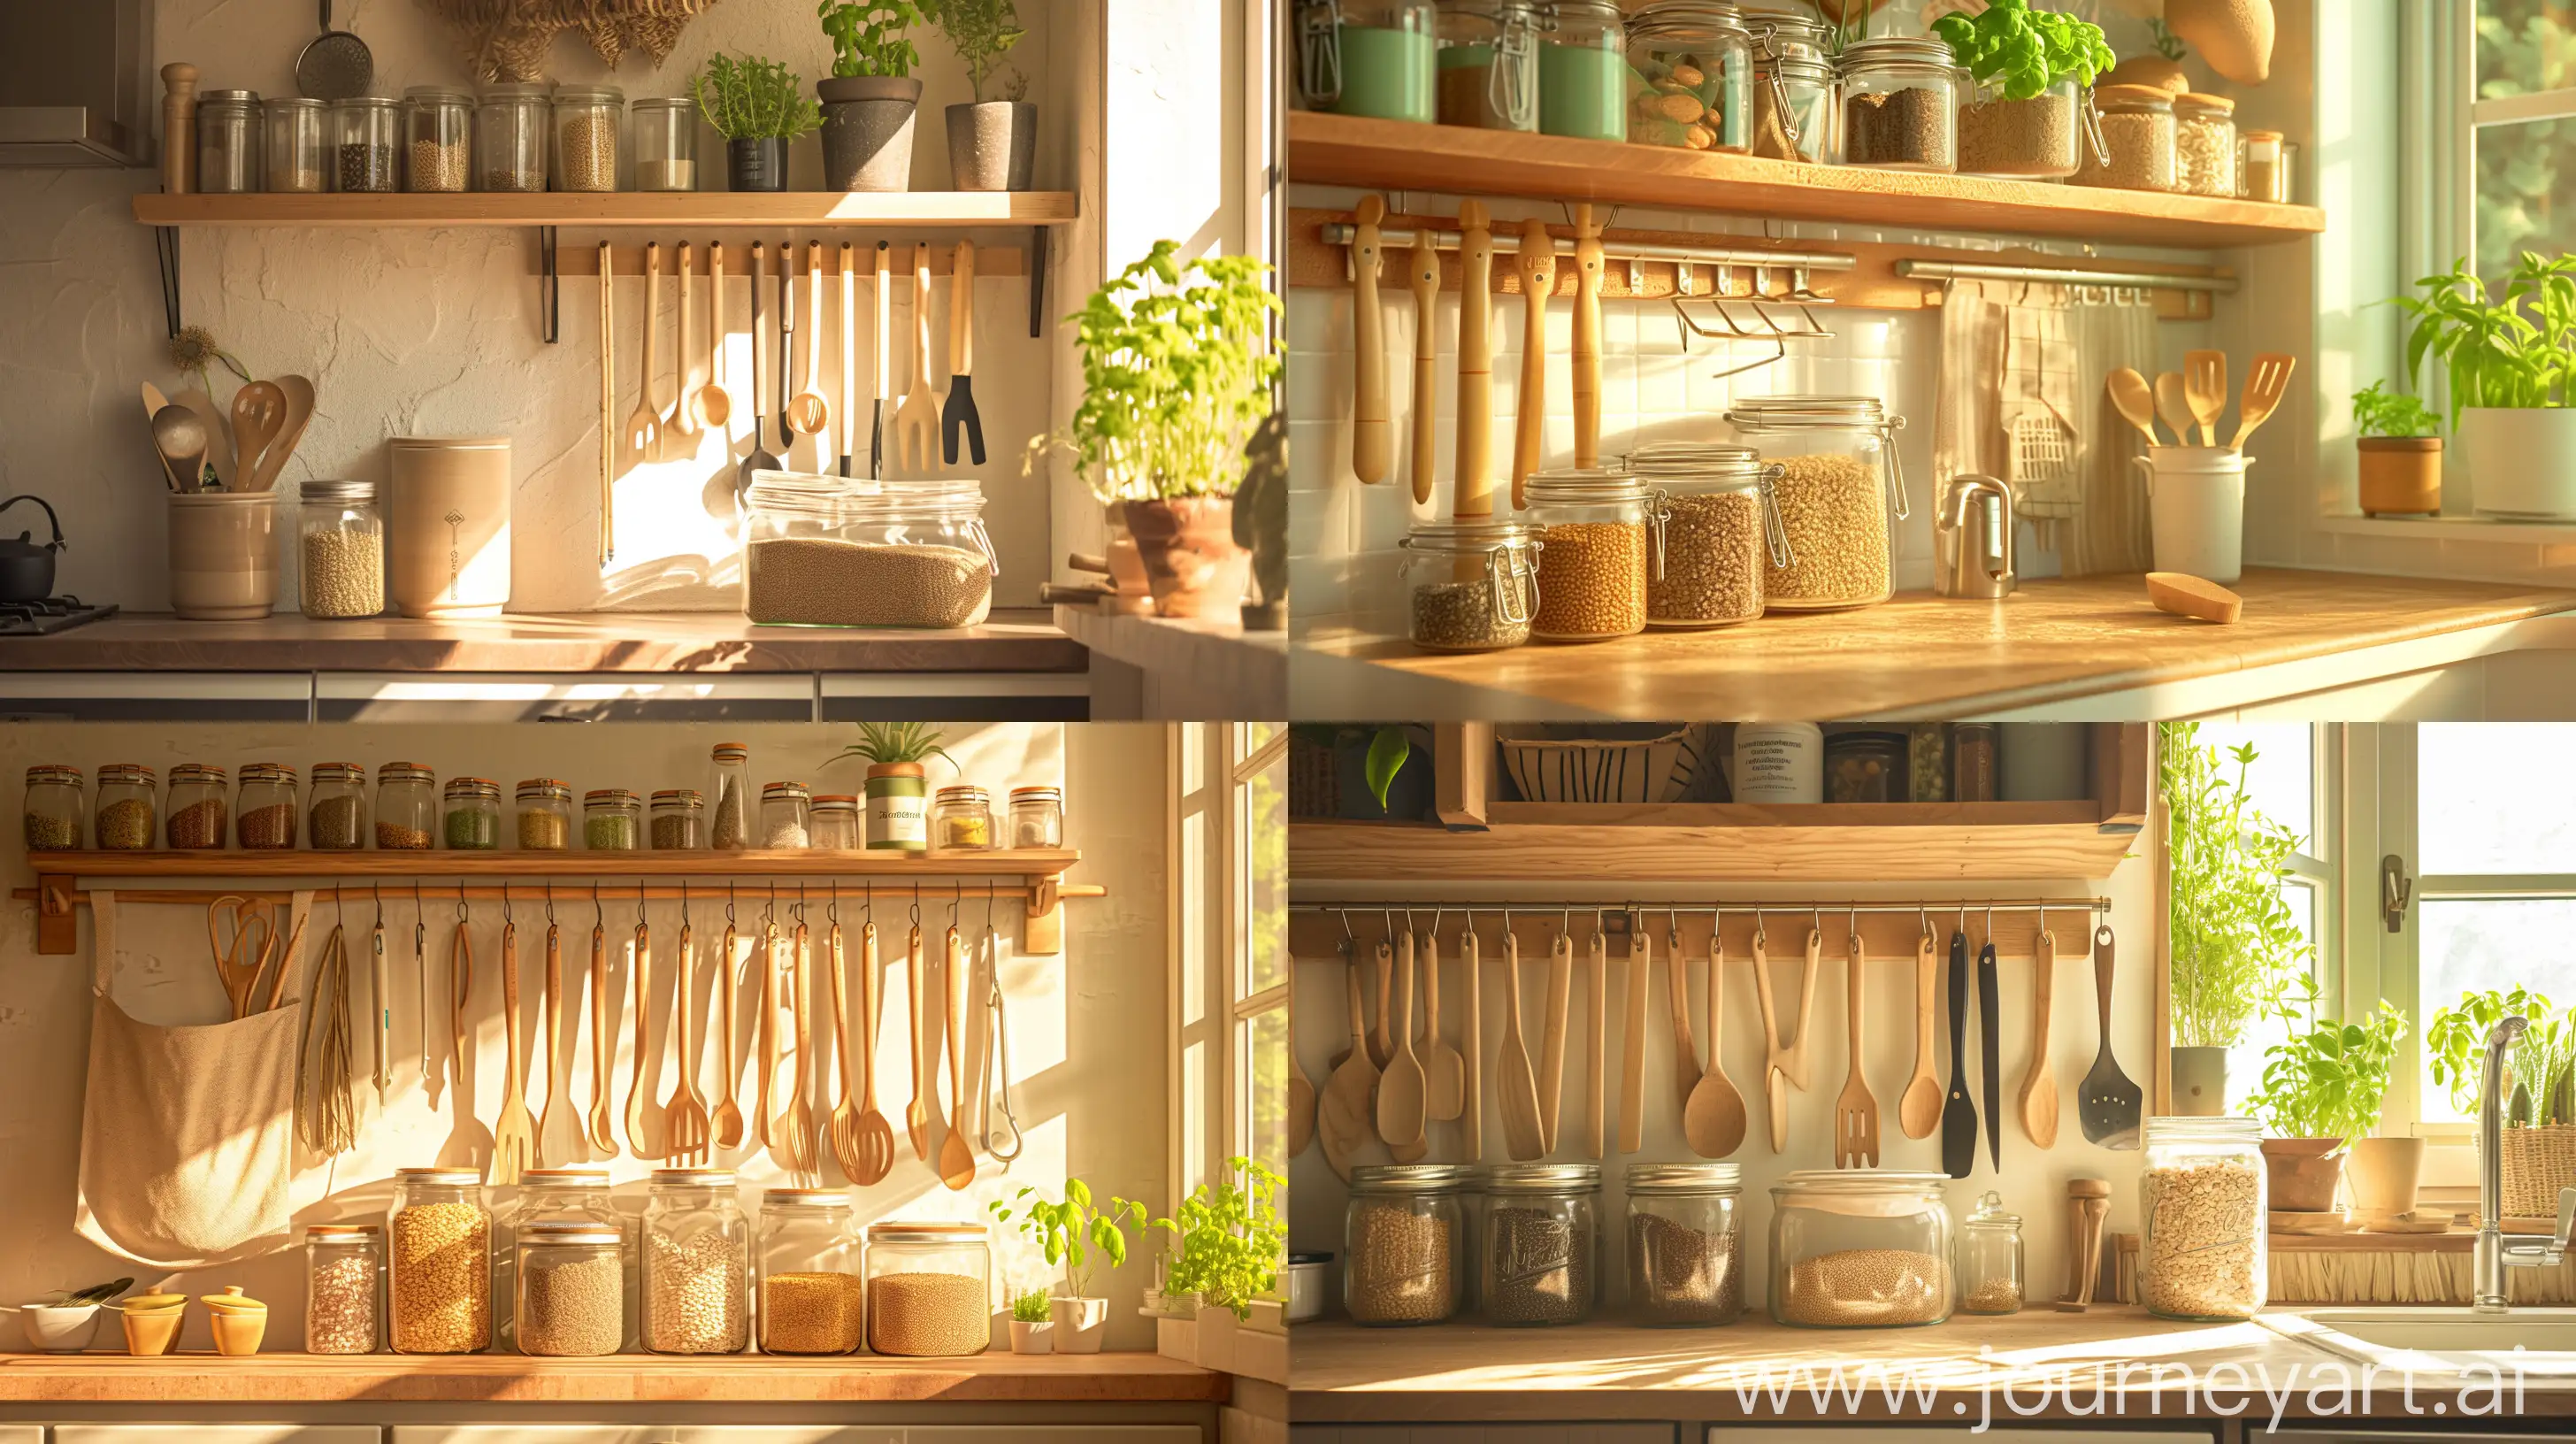 EcoFriendly-Kitchen-with-Bamboo-Utensils-and-Mason-Jars